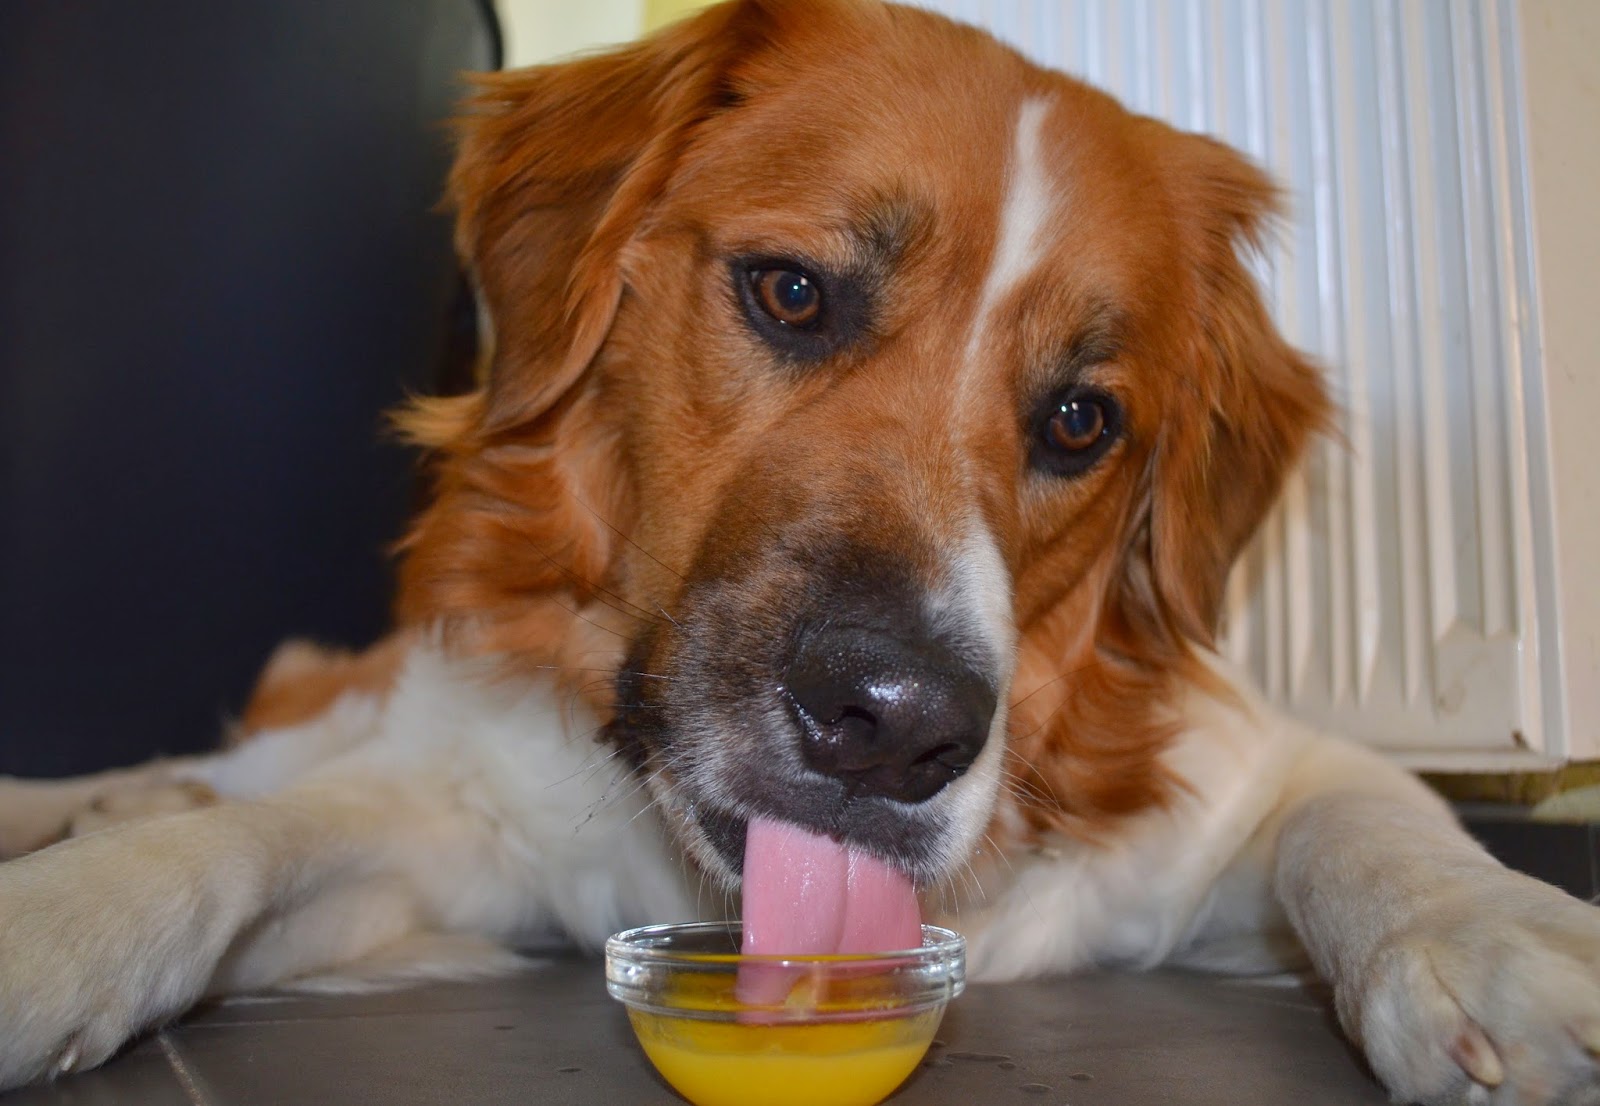 Is orange juice good for dogs?